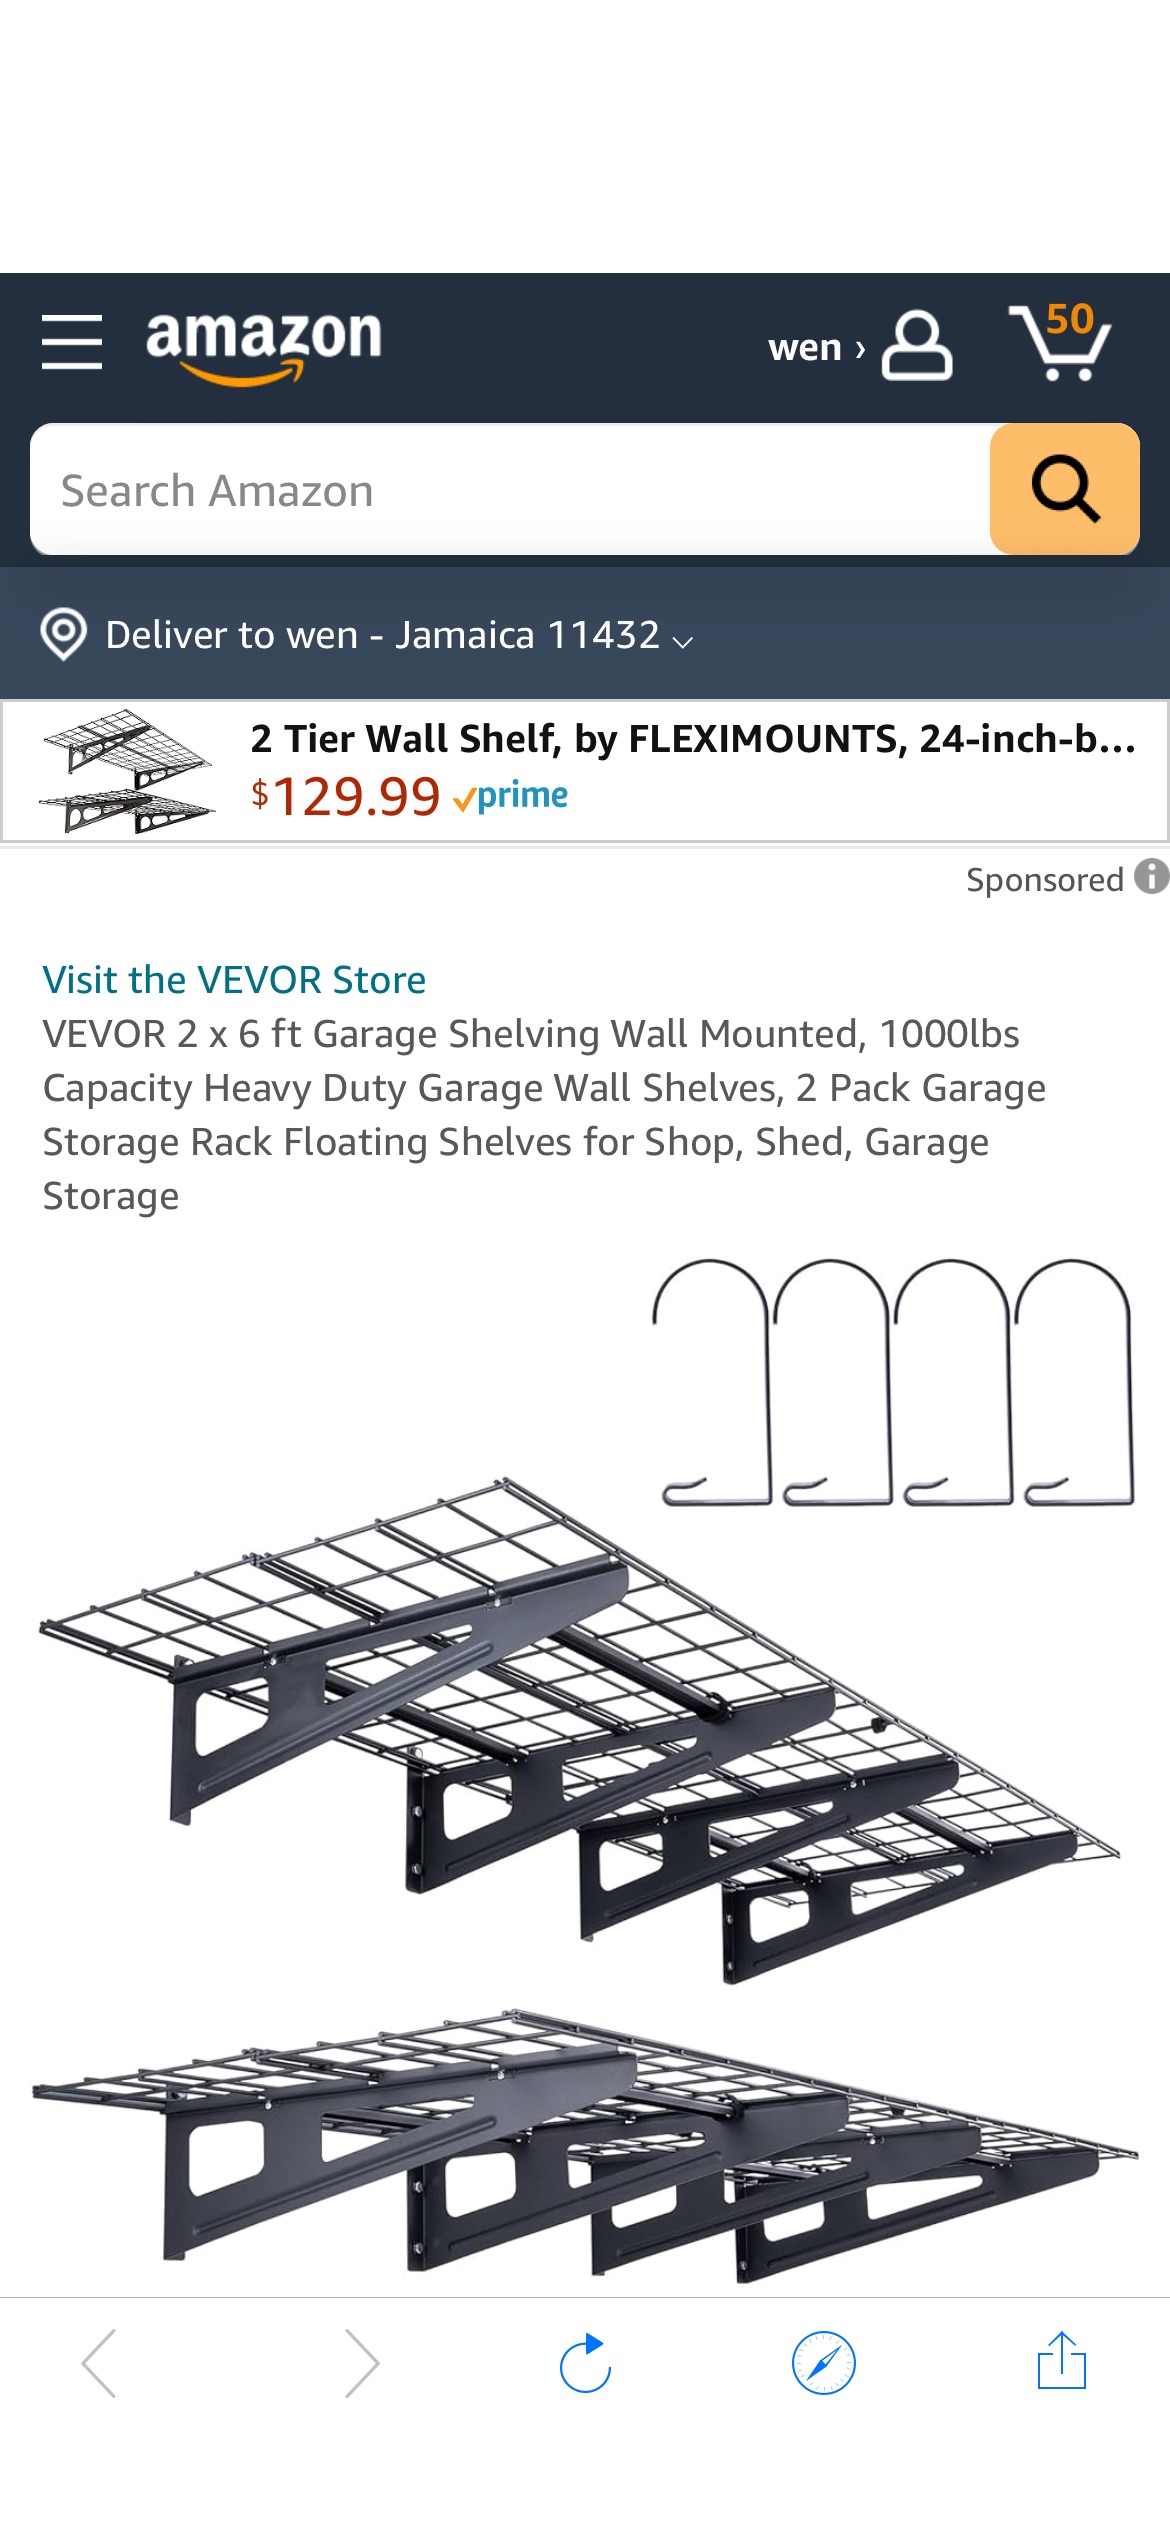 VEVOR 2 x 6 ft Garage Shelving Wall Mounted, 1000lbs Capacity Heavy Duty Garage Wall Shelves, 2 Pack Garage Storage Rack Floating Shelves for Shop, Shed, Garage Storage - Amazon.com